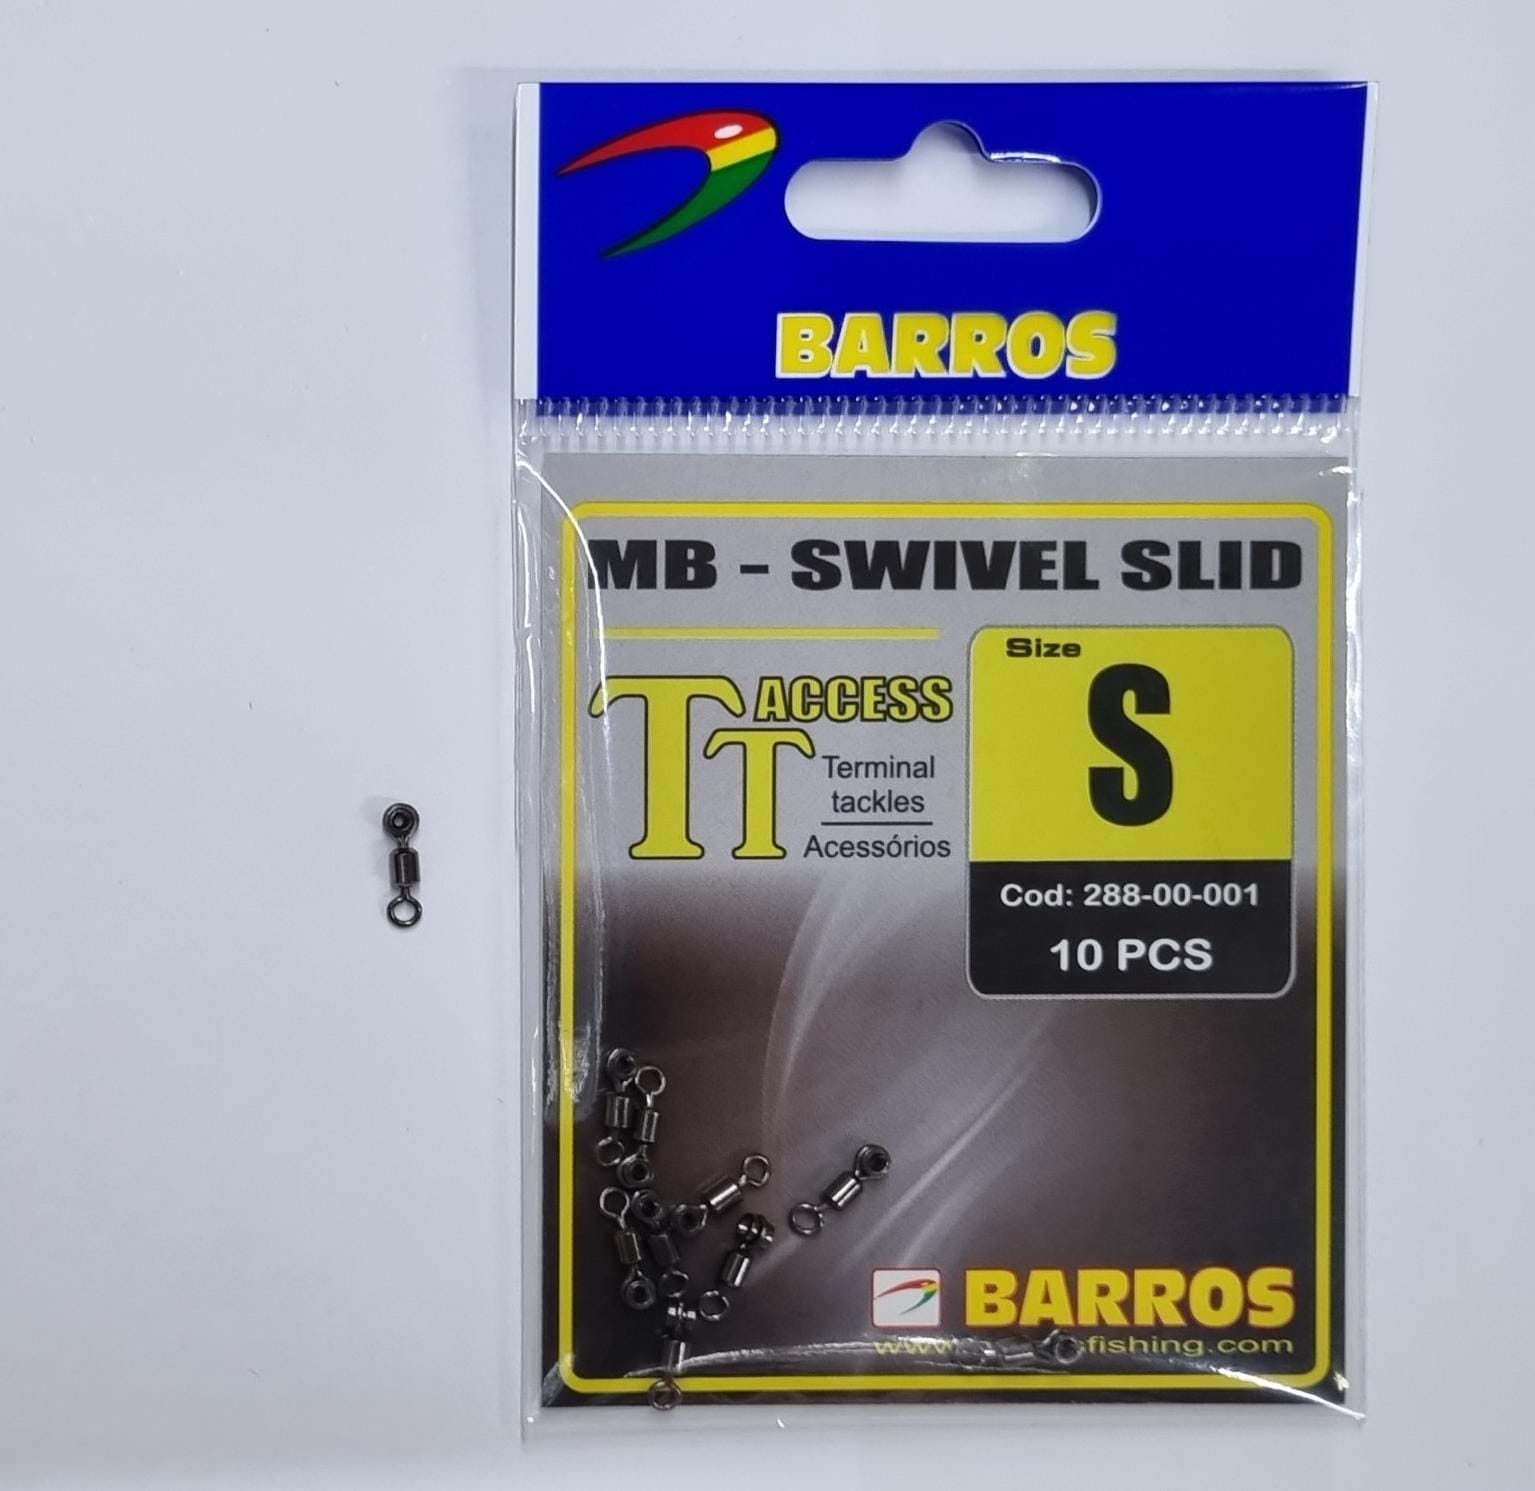 BARROS-MB-SWIVEL-SLID.jpg